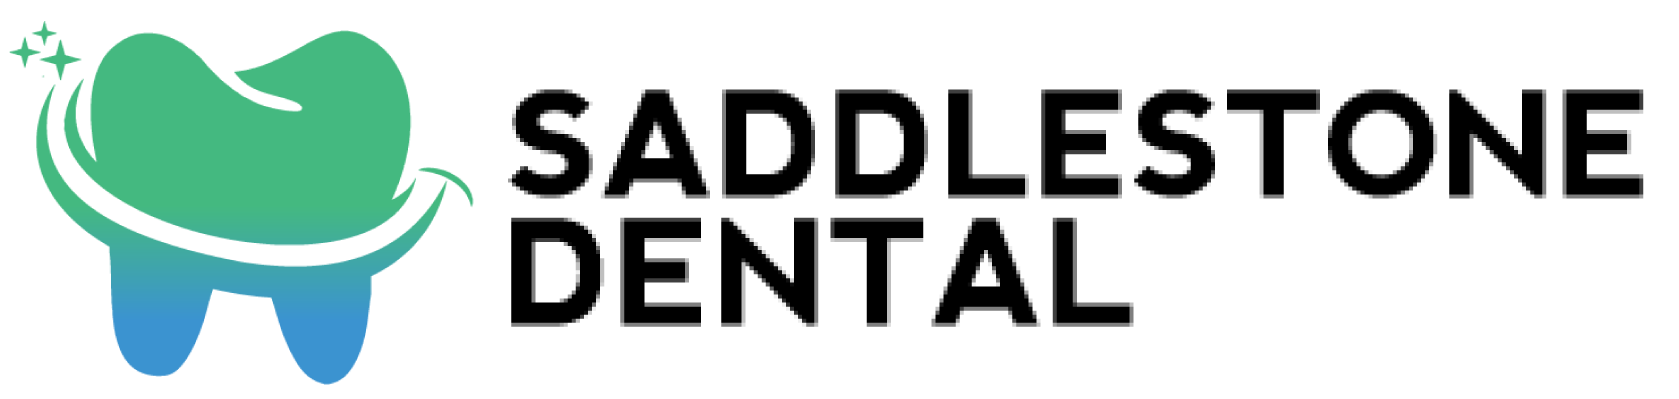 Saddlestone dental logo